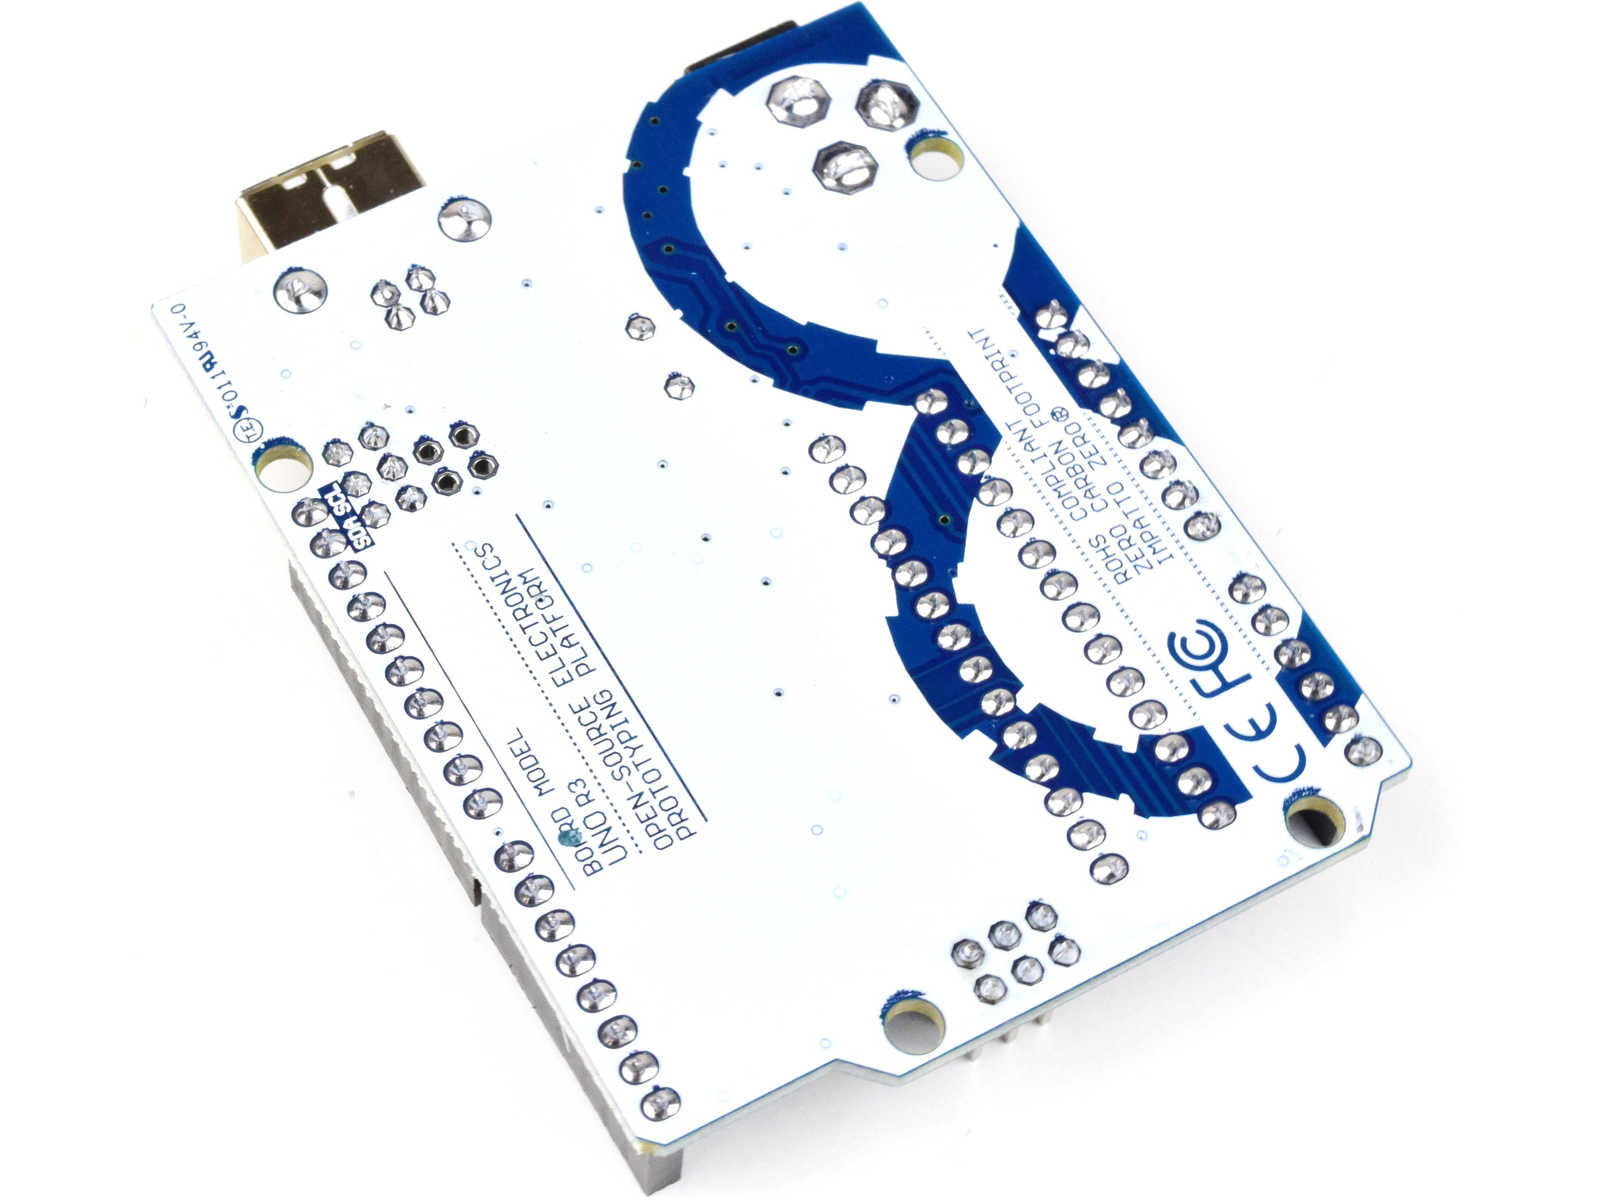 UNO R3 module Atmega328P + Atmega16u2 USB (100% compatible with Arduino) 11